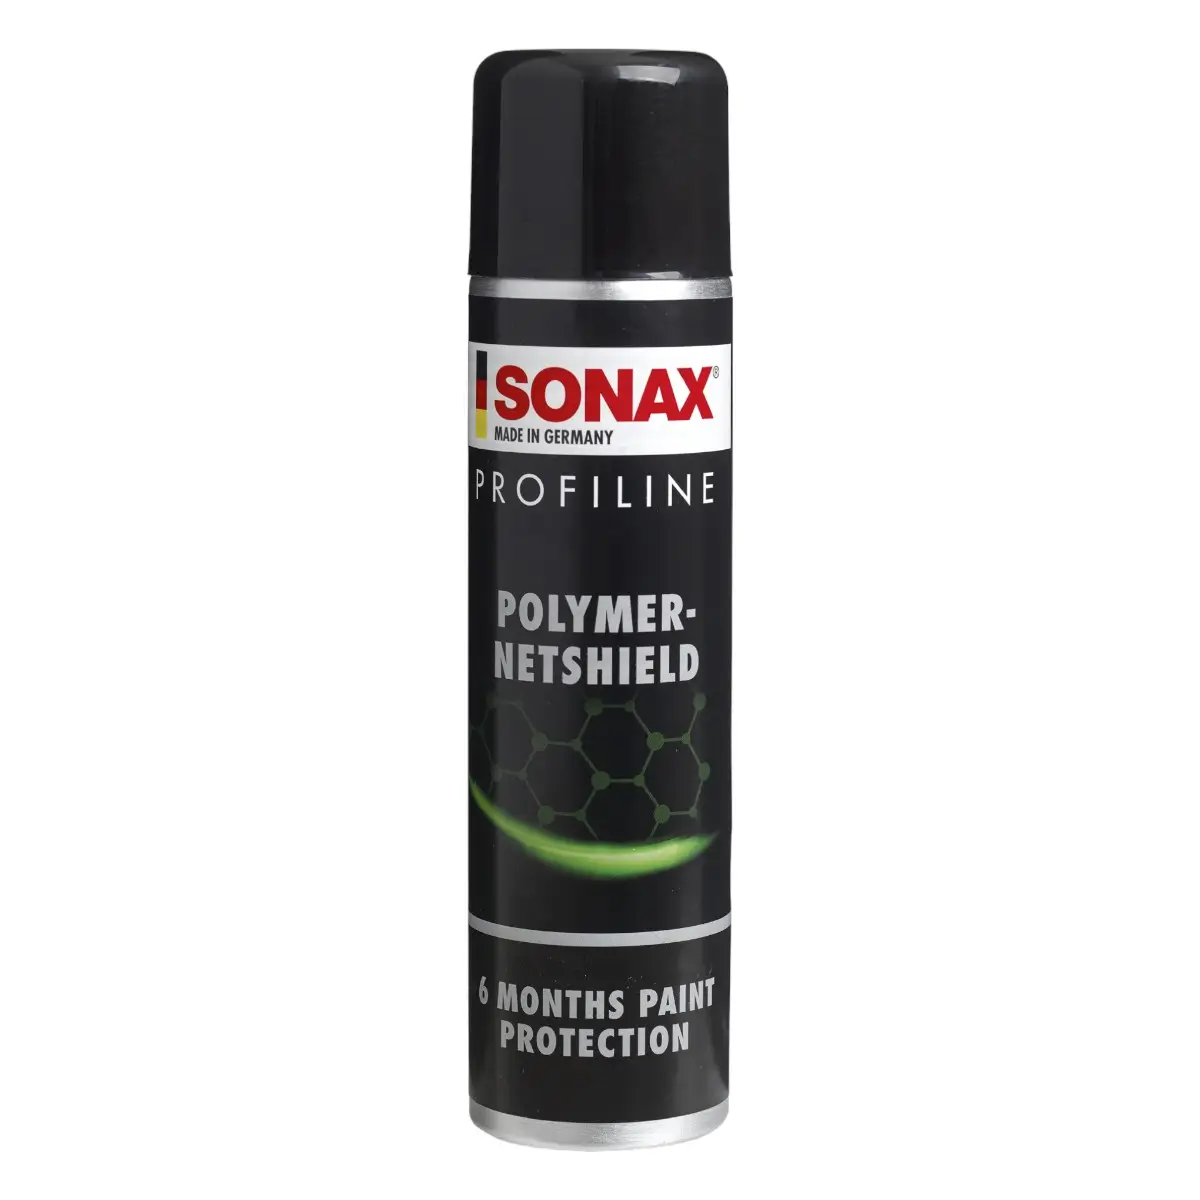 Sonax Profiline Polymer NetShield 340ml